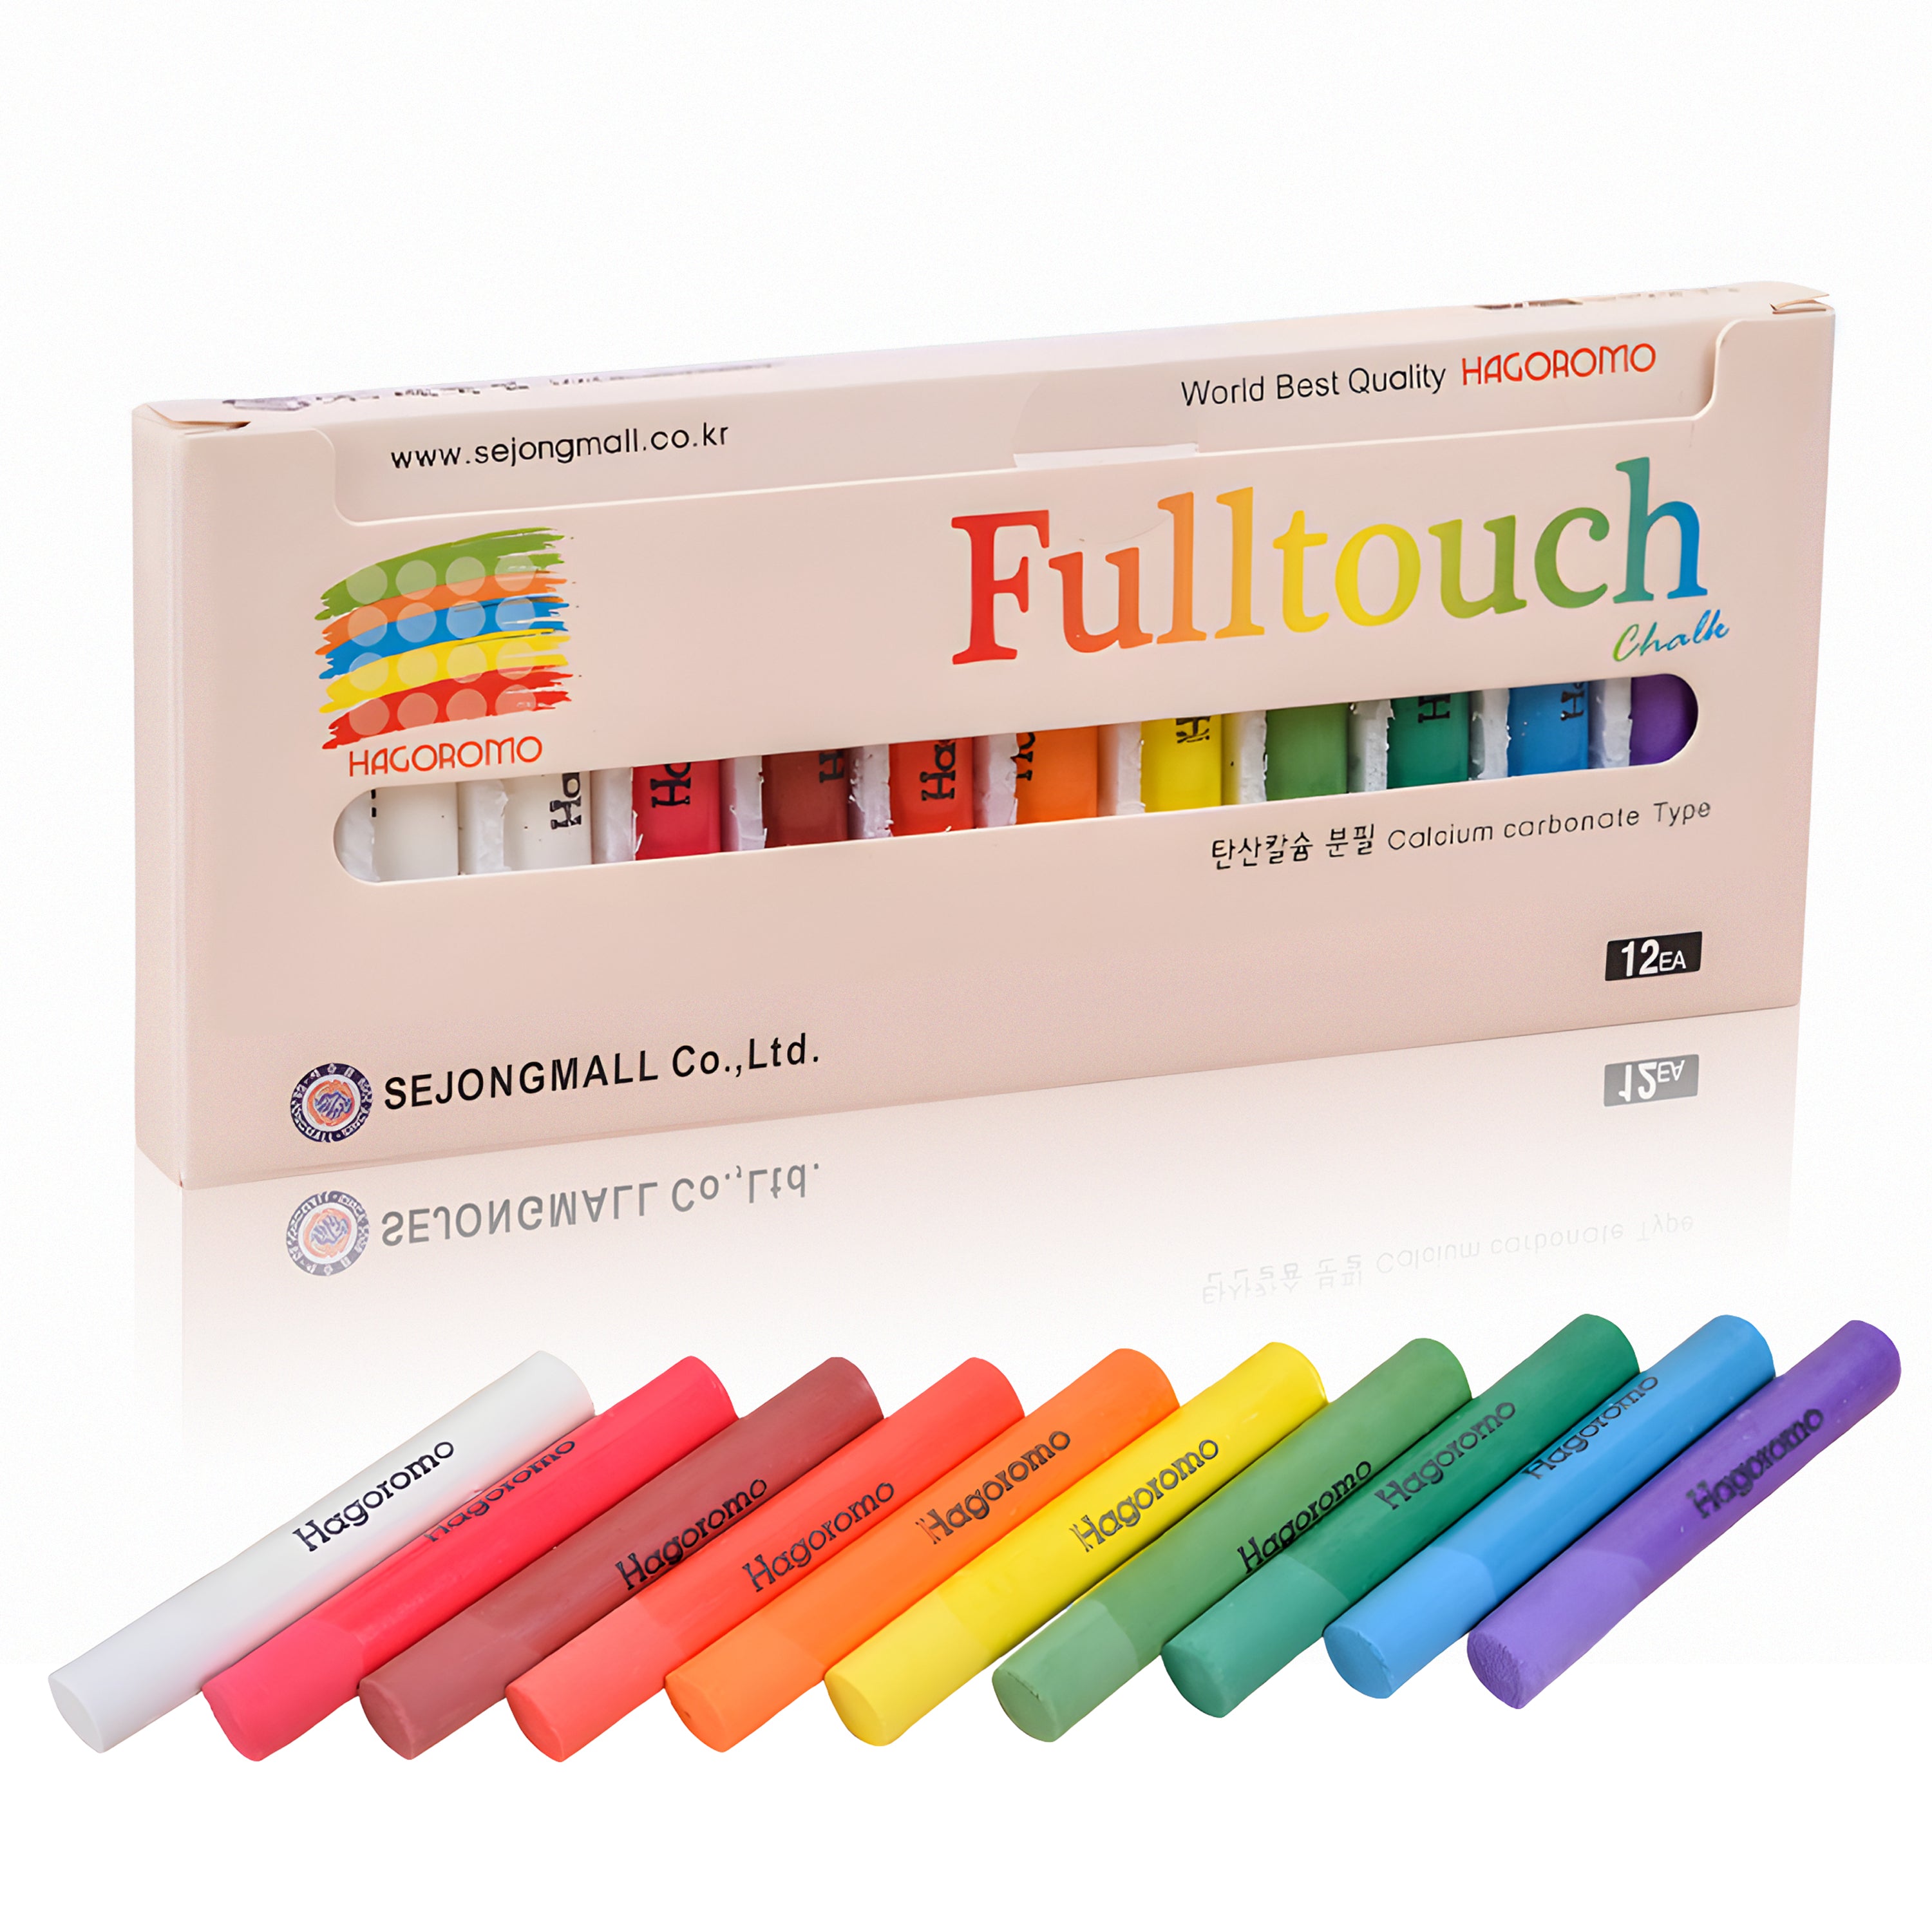 Fulltouch 3-color Mix Chalk 72pcs & Hagoromo Fulltouch White Chalk 12pcs